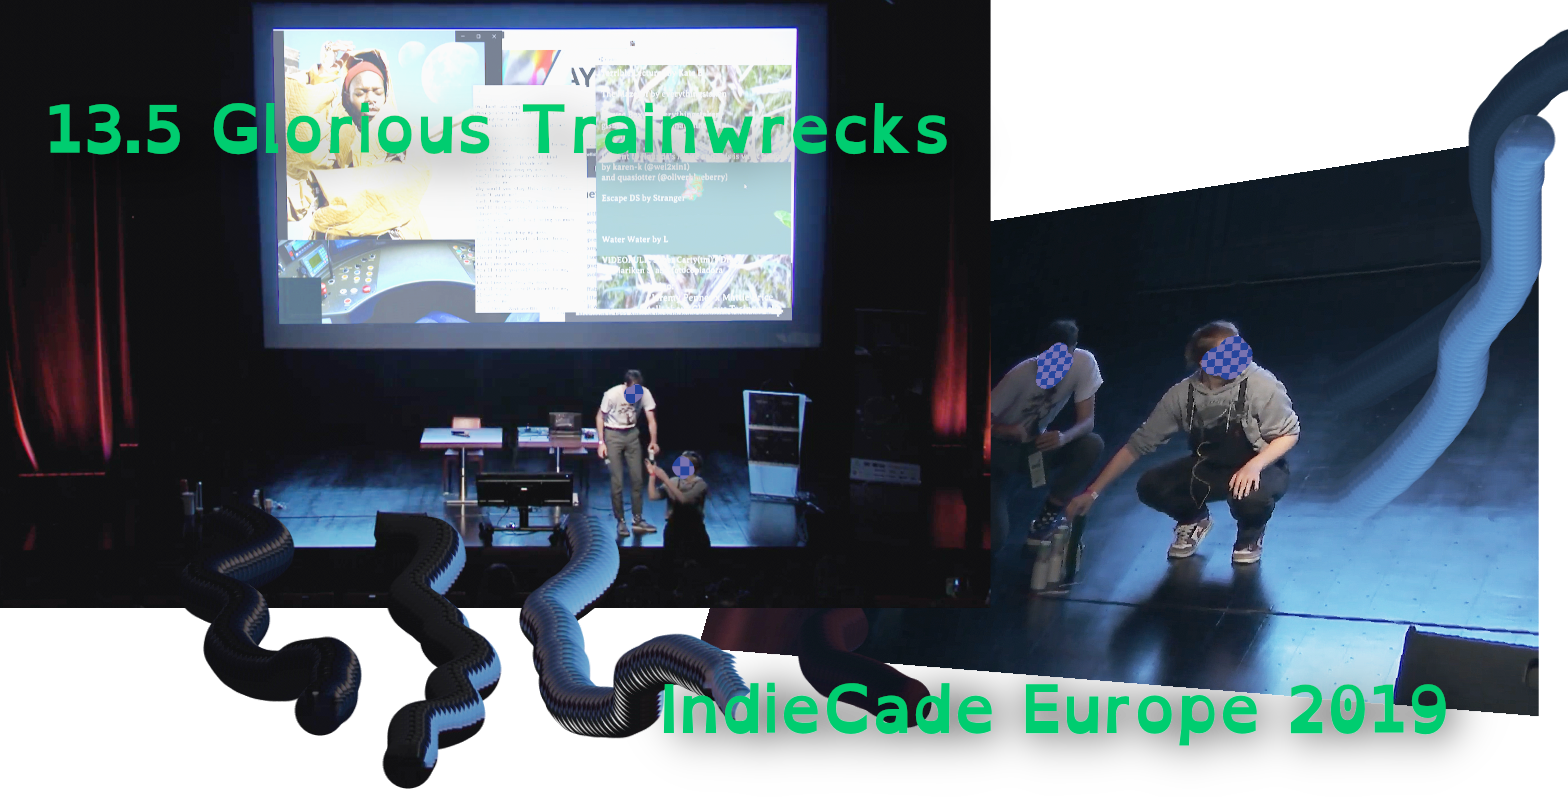 13.5 Glorious Trainwrecks at Indiecade Europe 2019